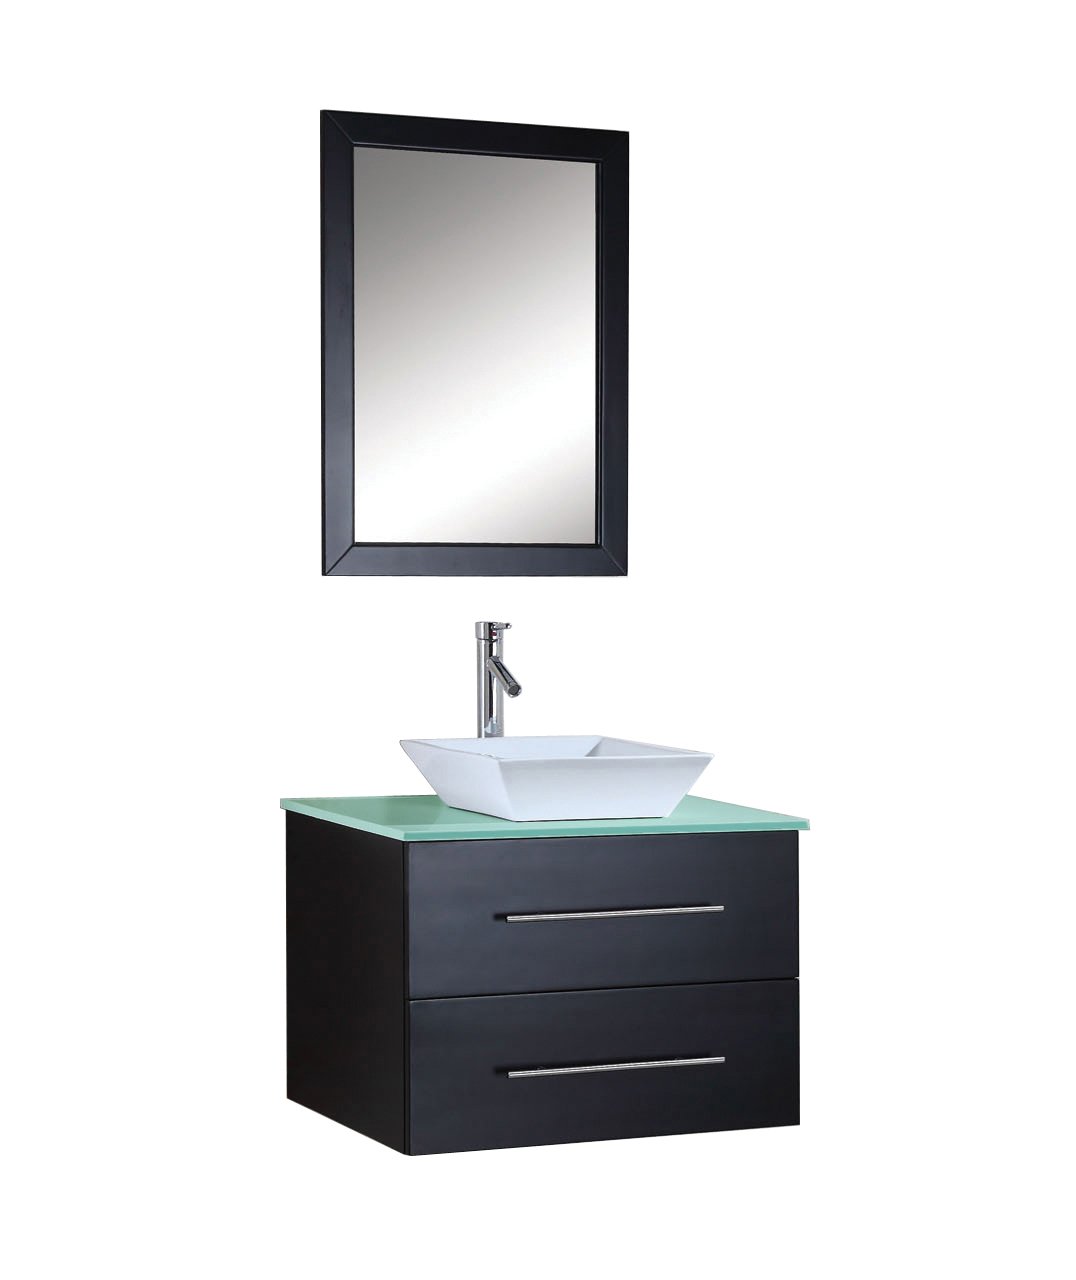 Virtu USA MS-560-G-ES Marsala 30-Inch Wall-Mounted Single Sink Bathroom Vanity Set with Tempered Glass Countertop, Espresso Finish